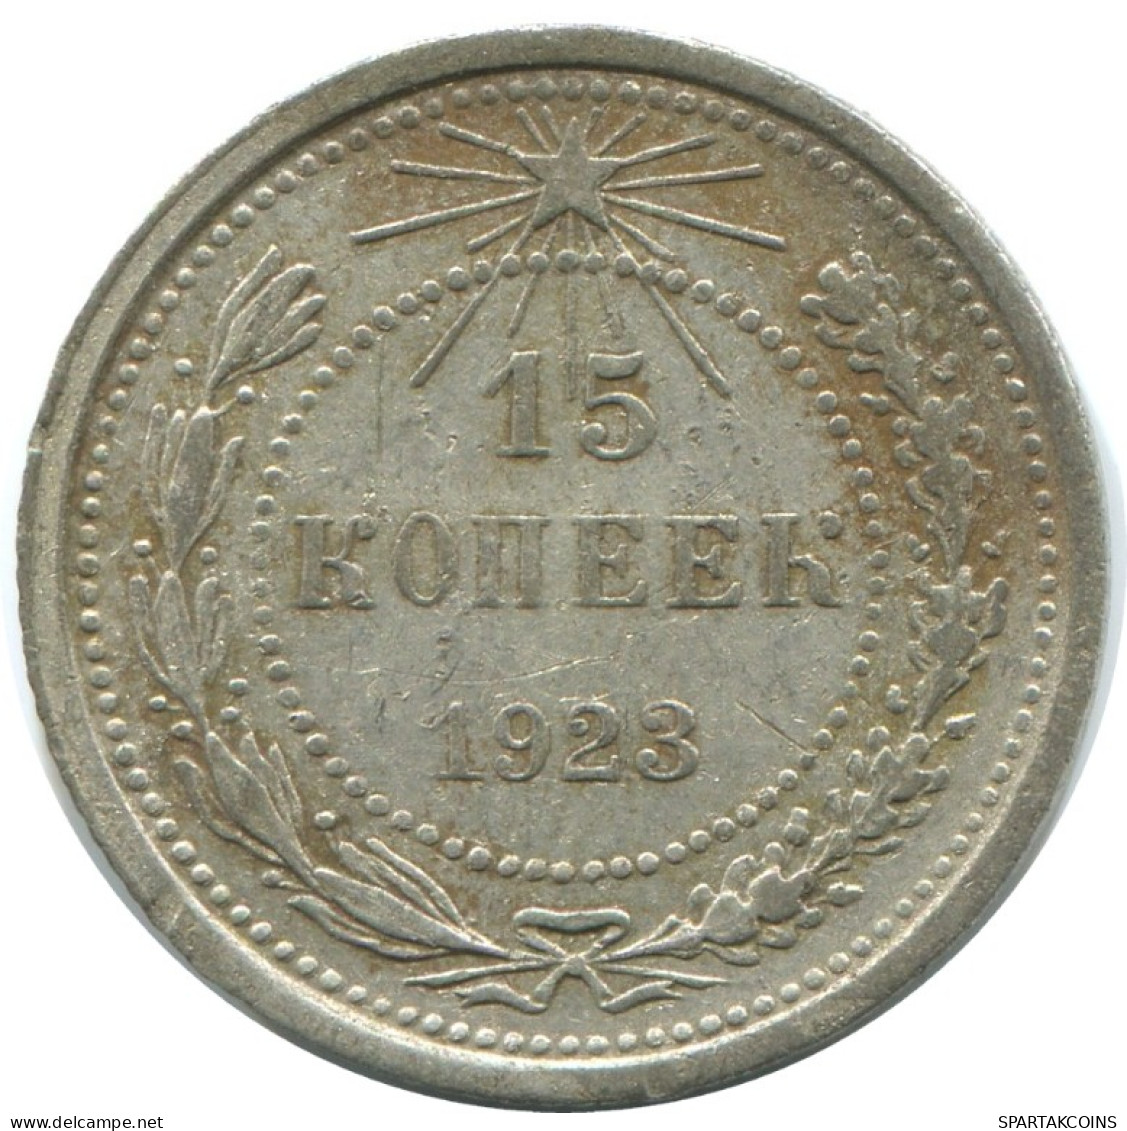 15 KOPEKS 1923 RUSSIA RSFSR SILVER Coin HIGH GRADE #AF119.4.U.A - Russia